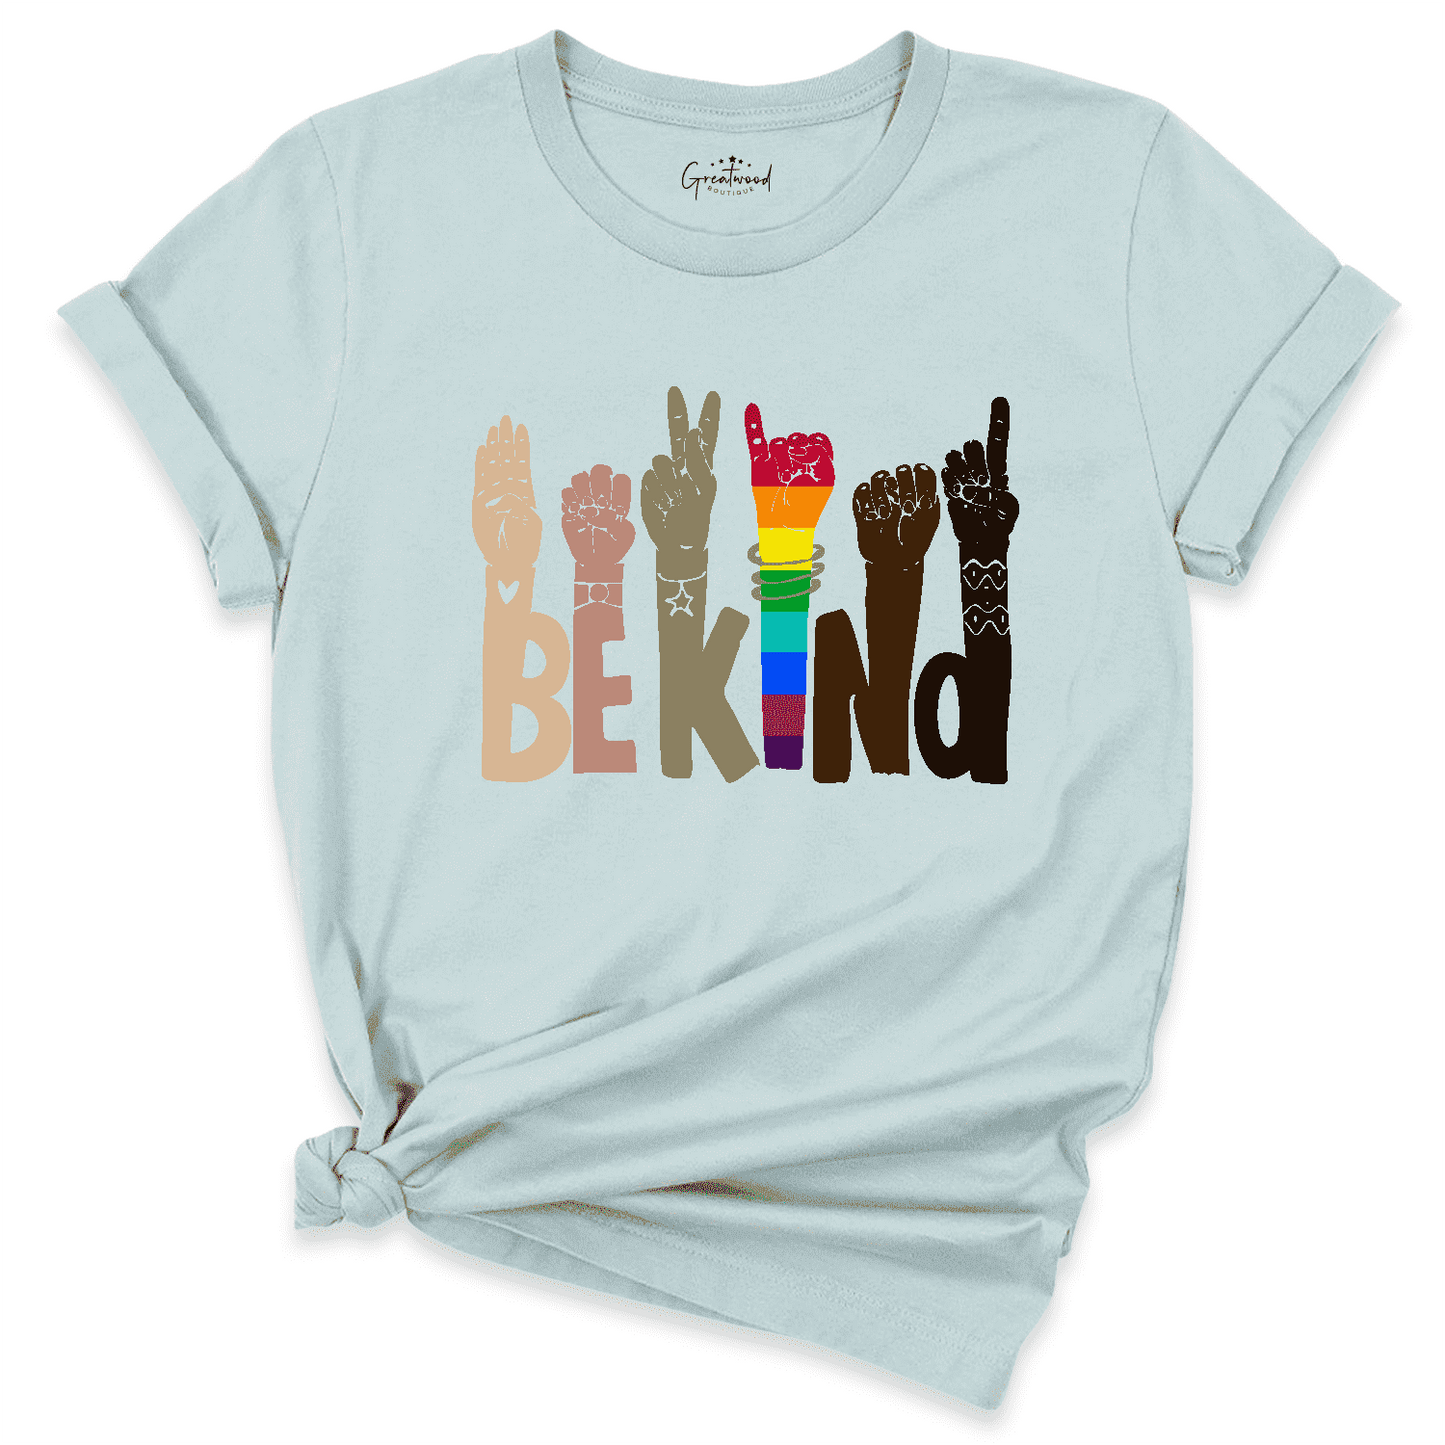 Be Kind Sign Language Shirt